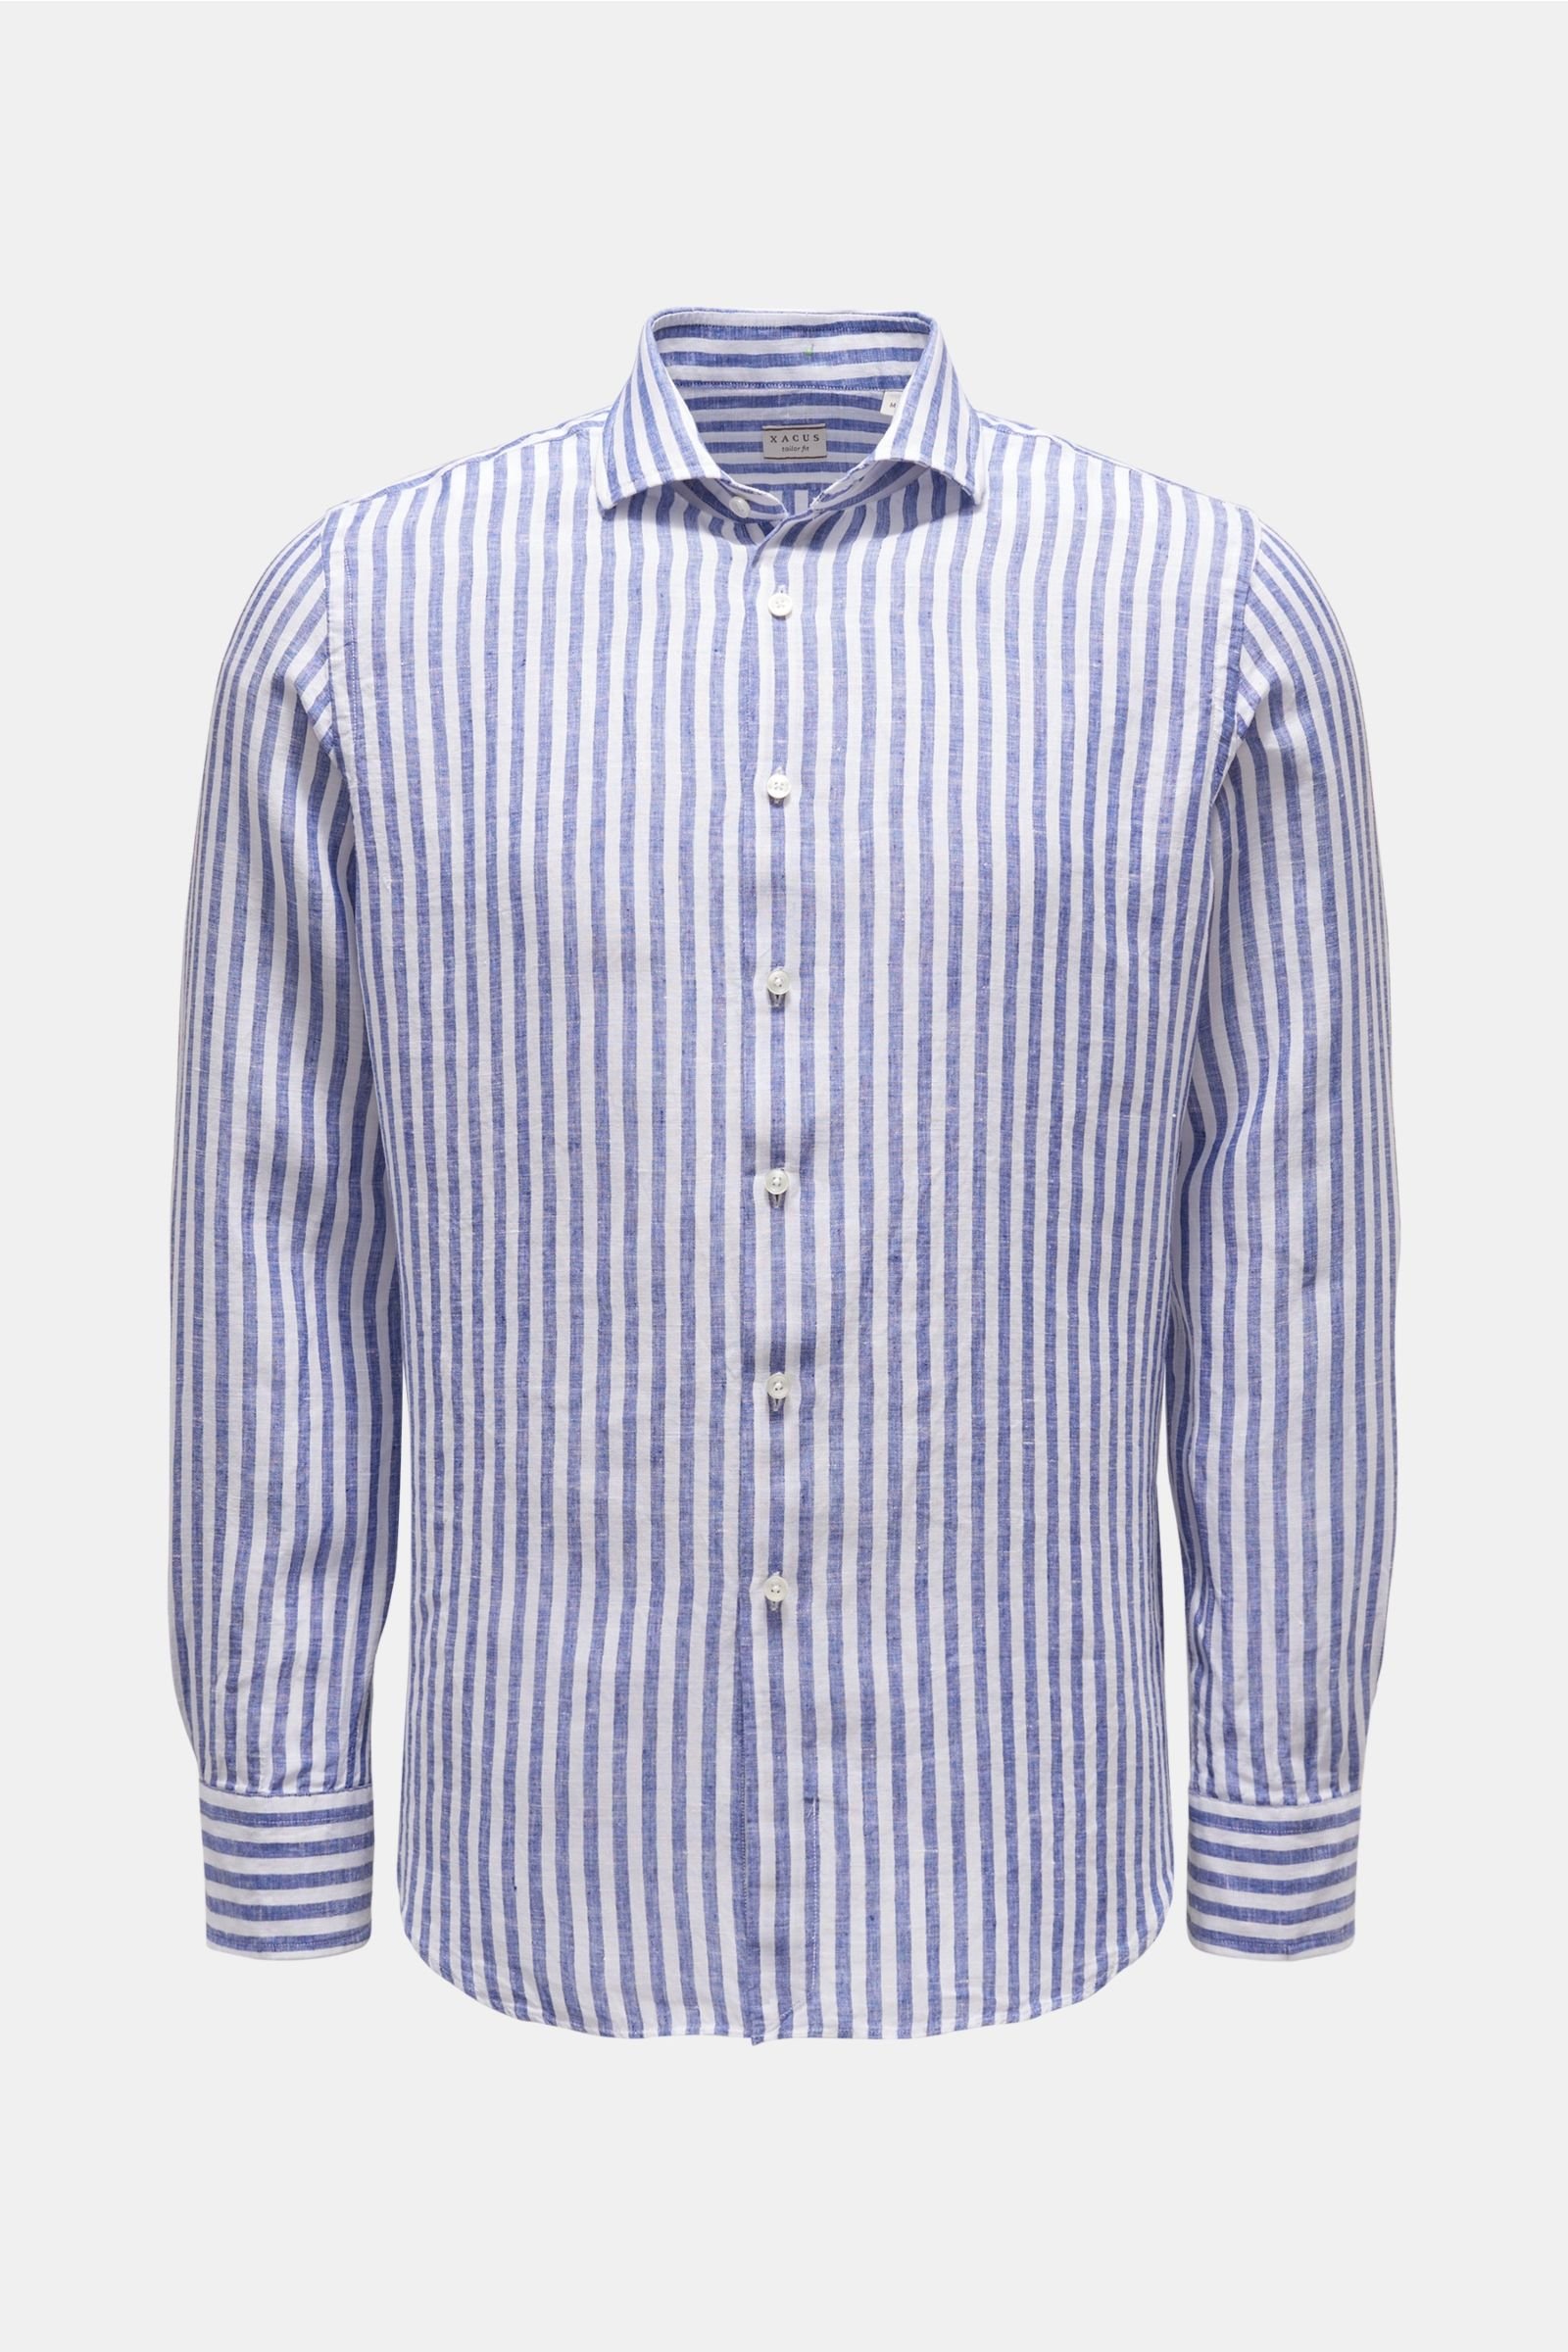 Linen shirt 'Tailor Fit' slim collar dark blue/white striped